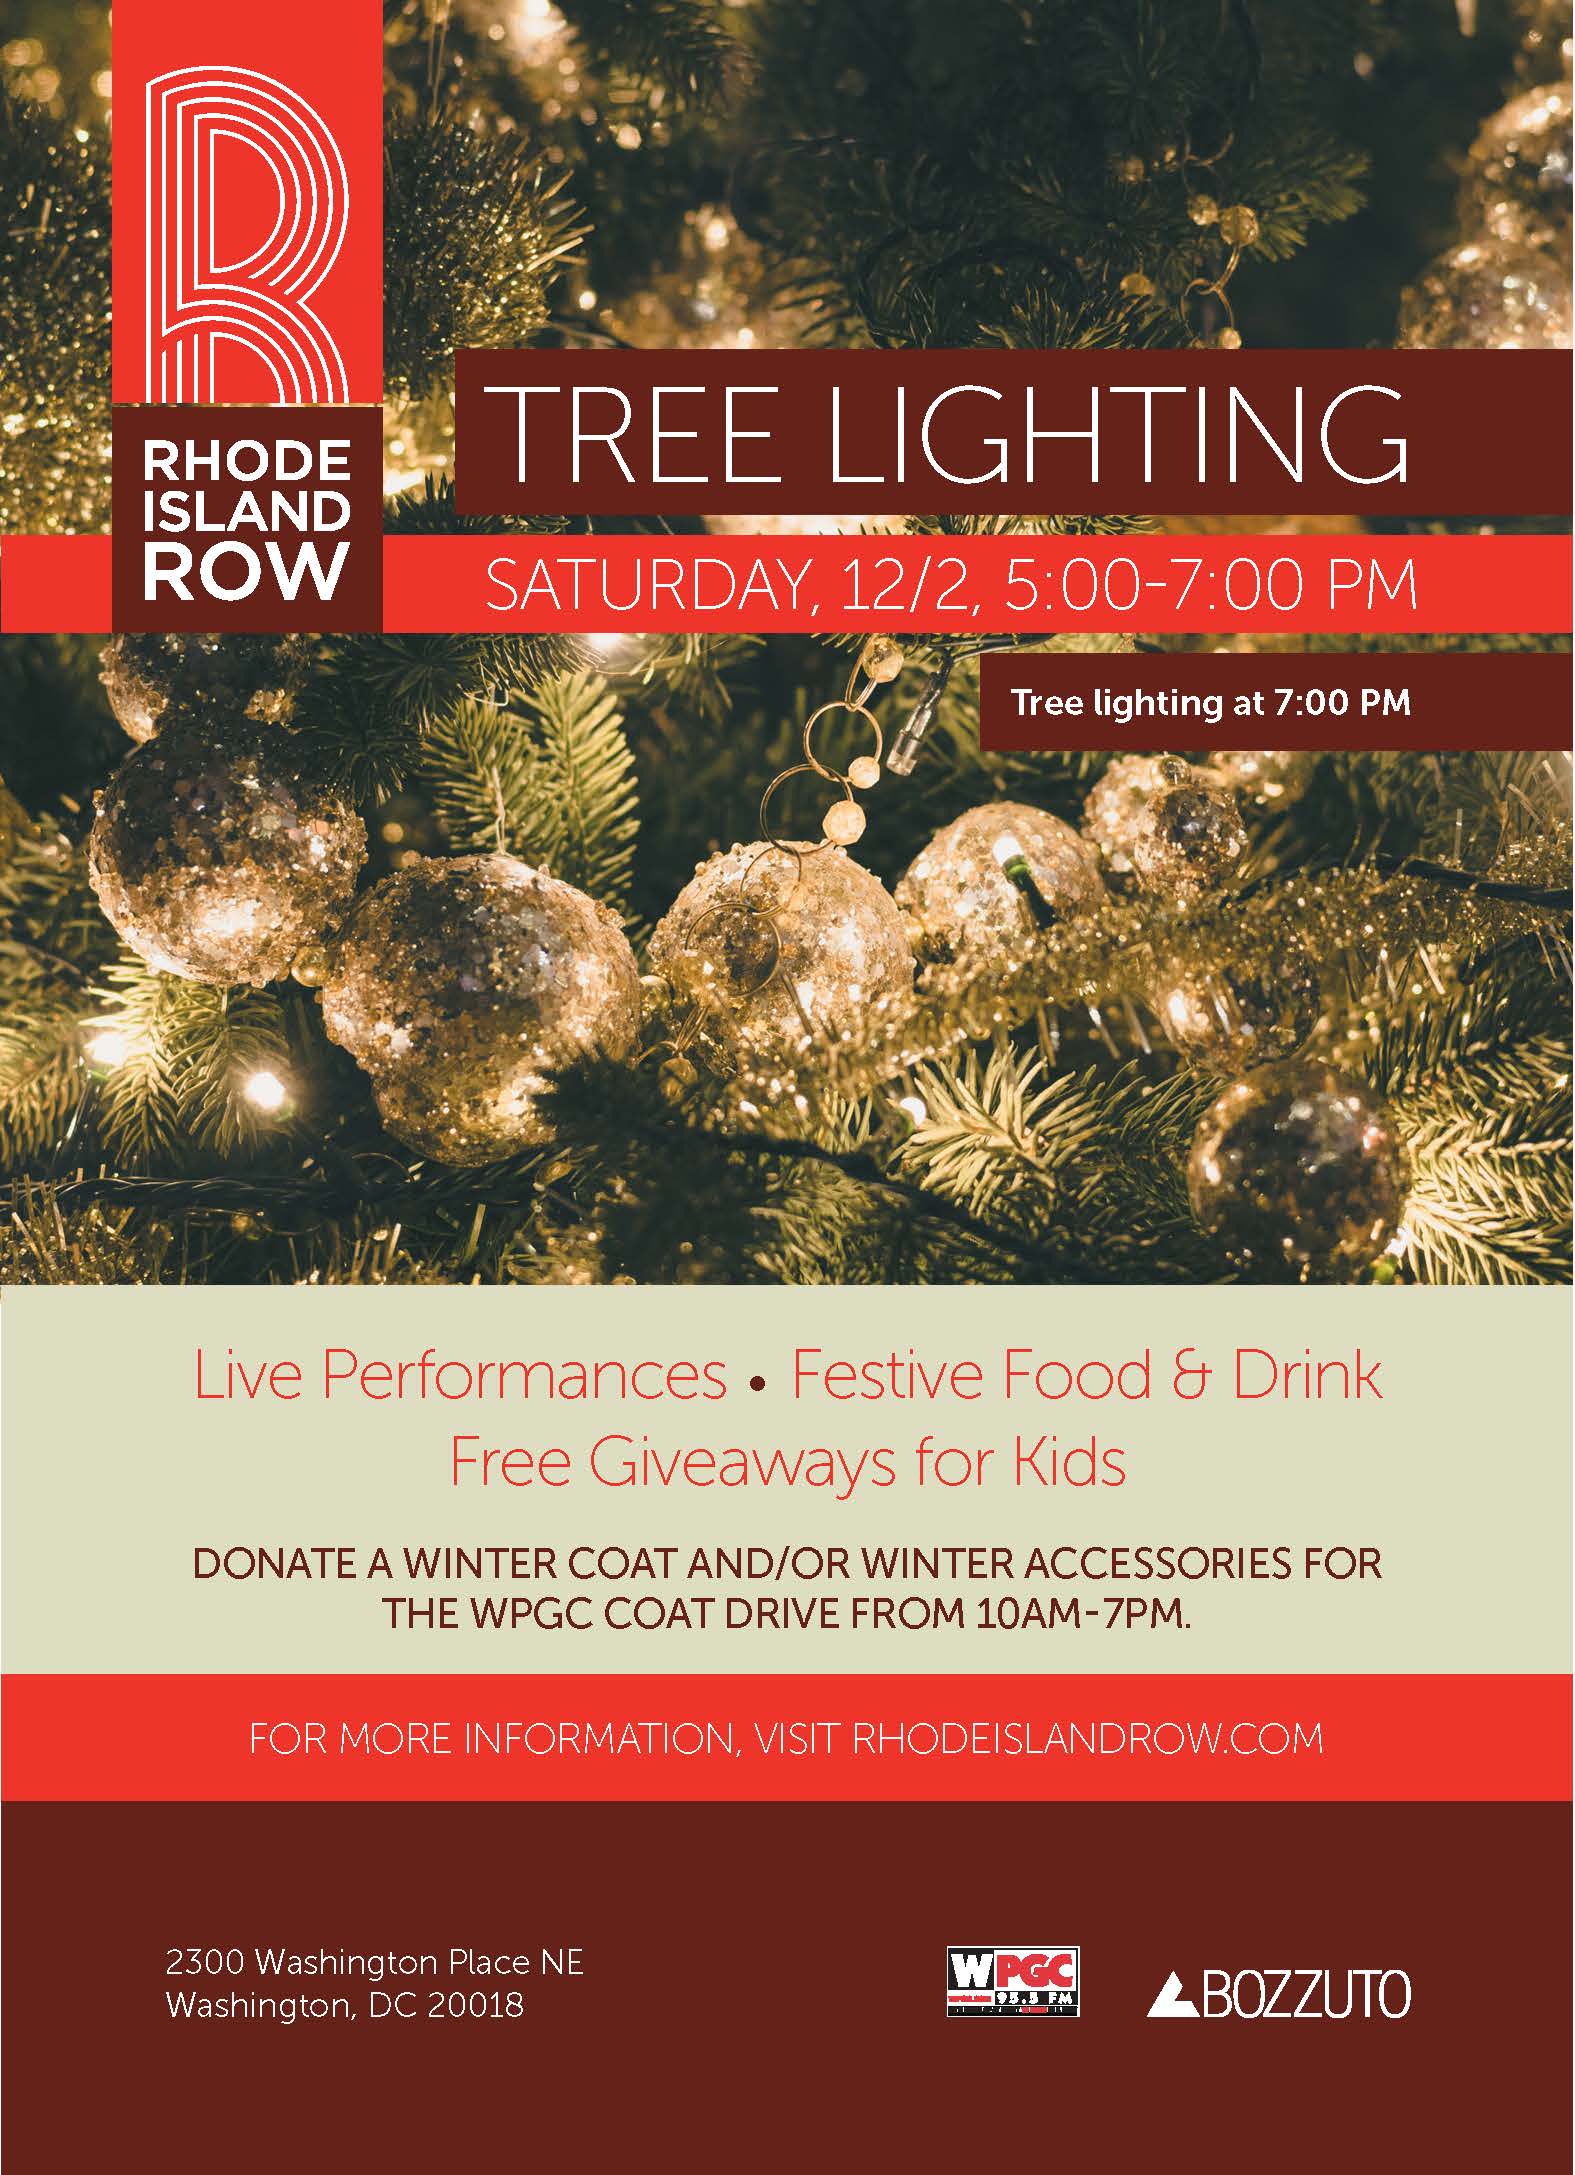 Celebrate The Season at The Rhode Island Row Tree Lighting